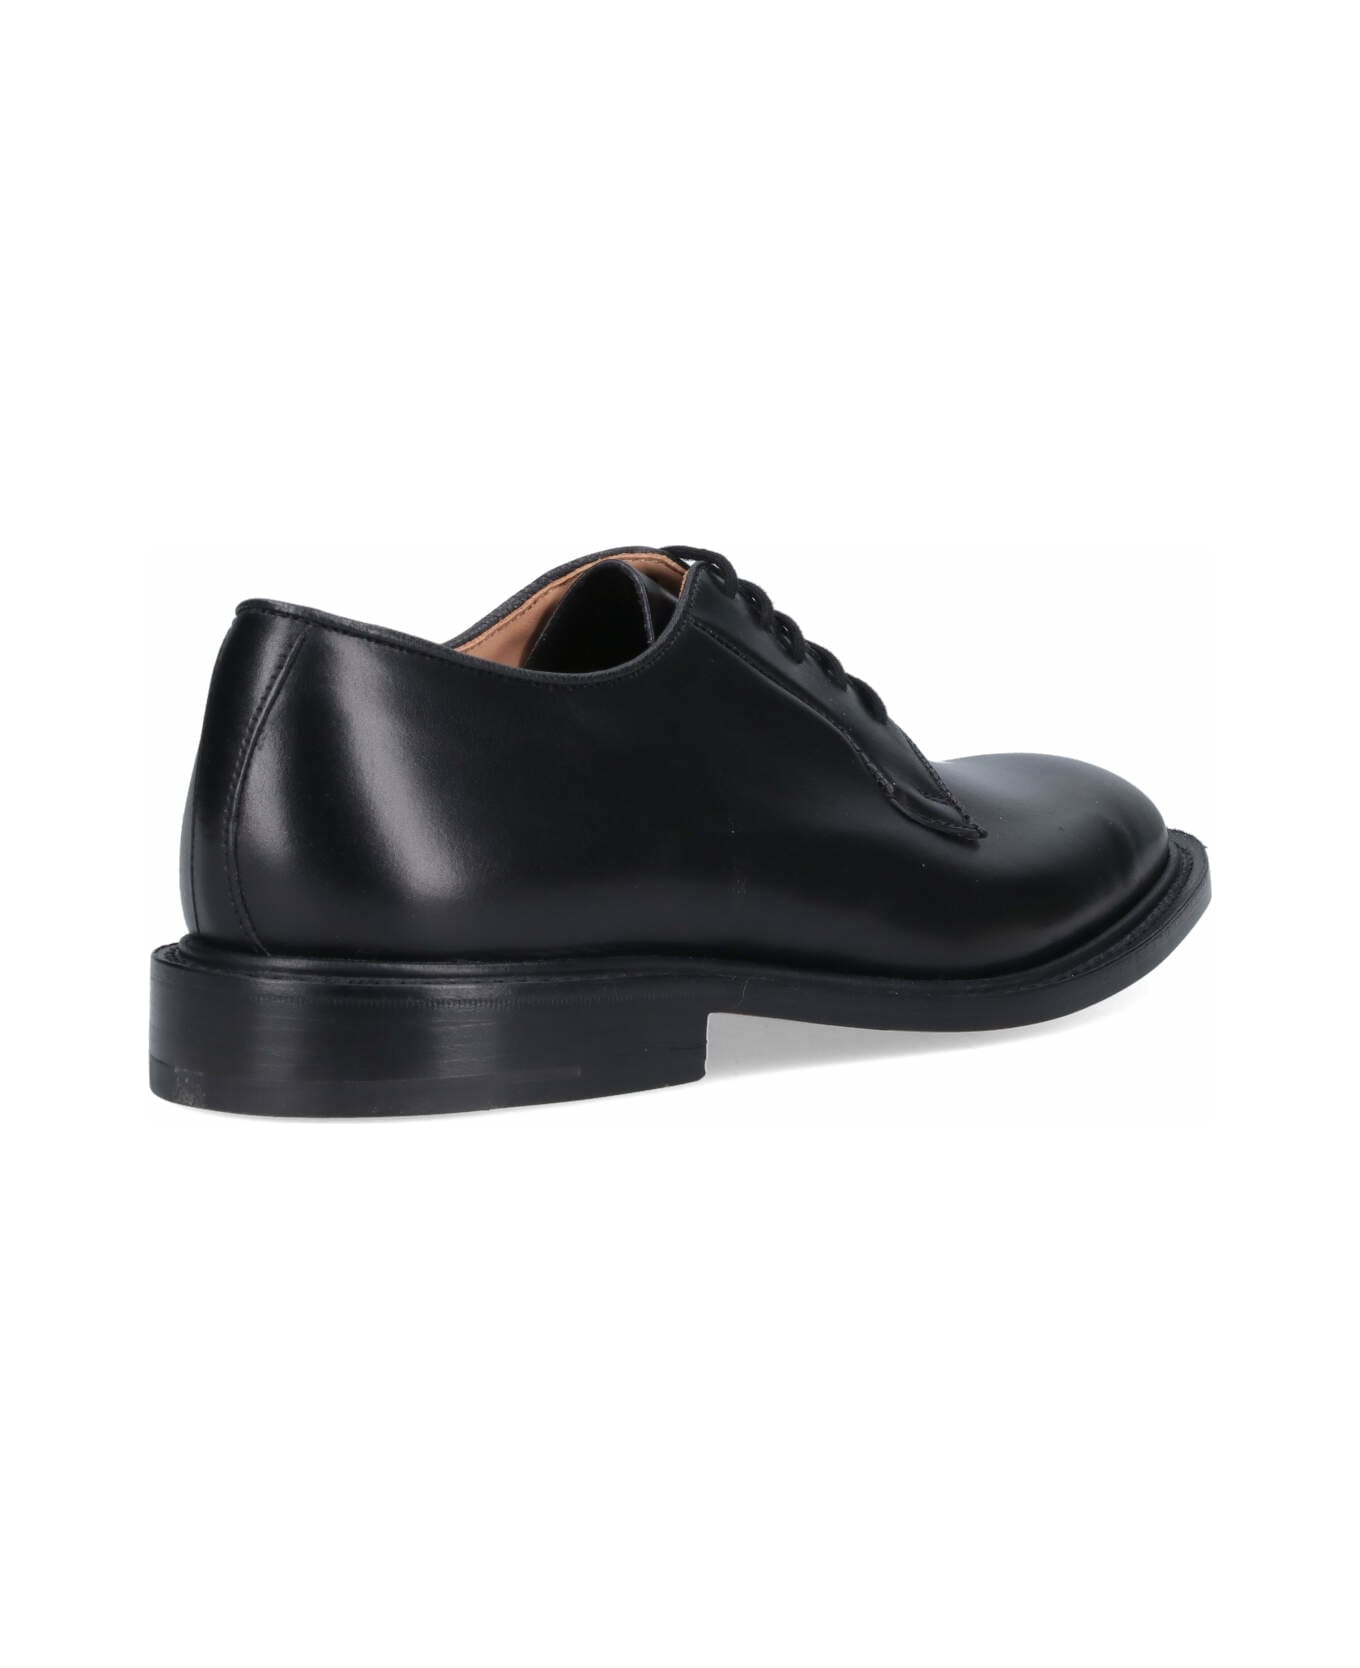 Tricker's Derby Shoes 'robert' - Black  